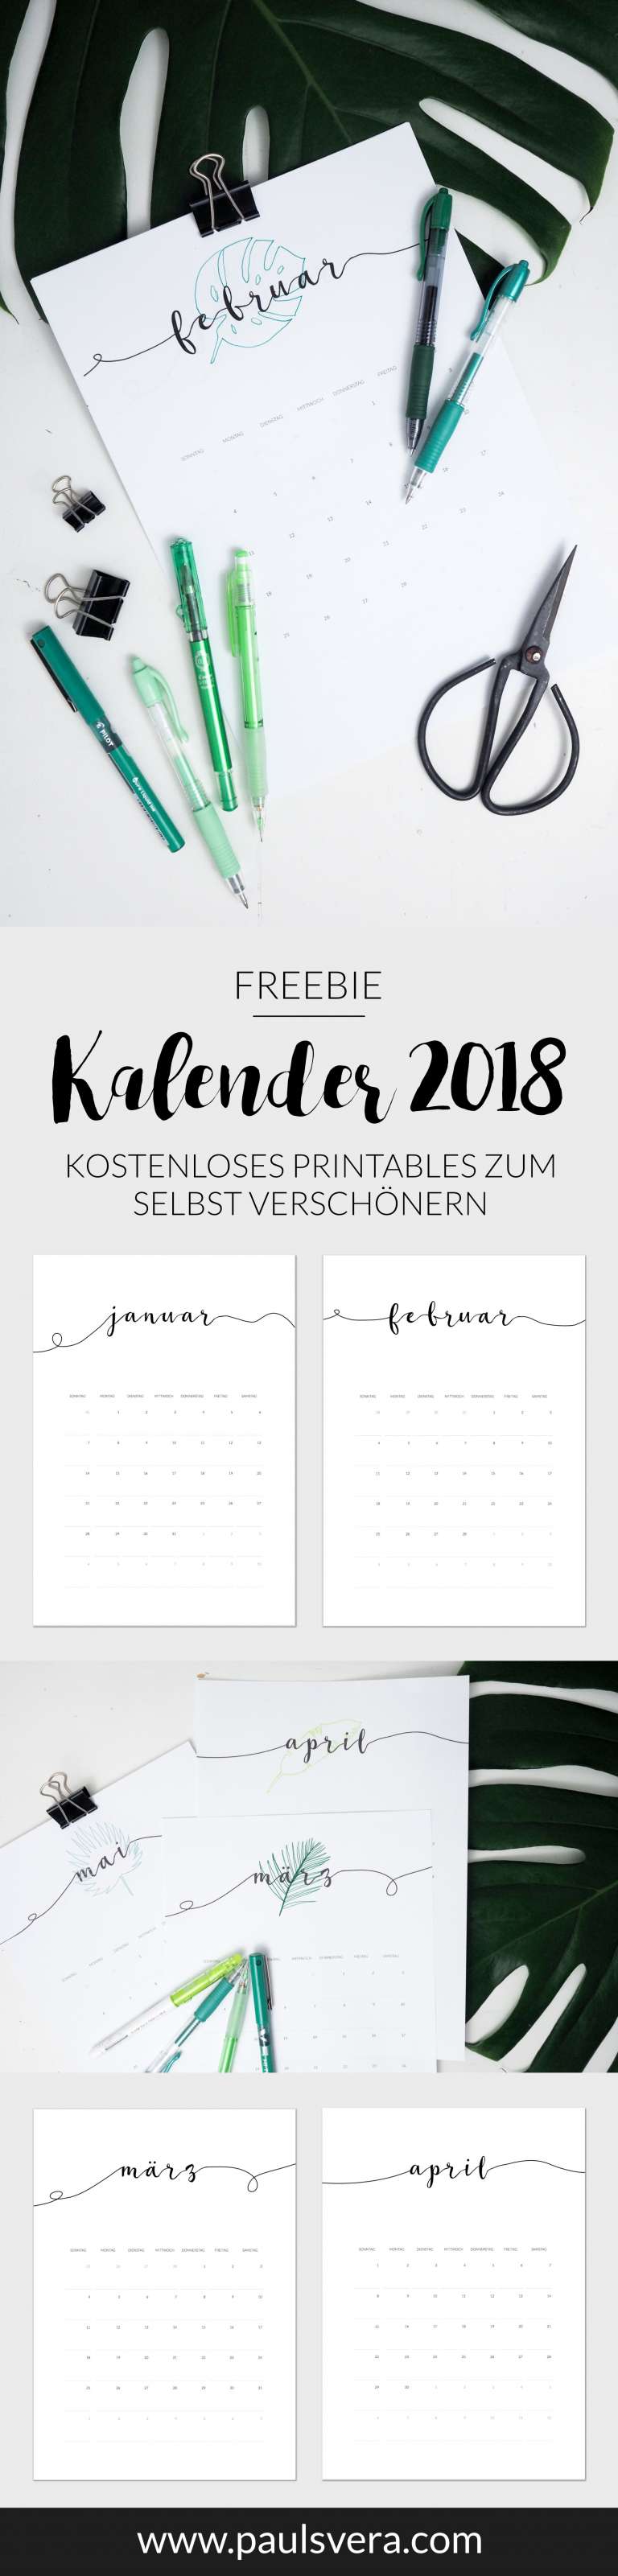 Freebie: Kalender 2018 als kostenloses Printables